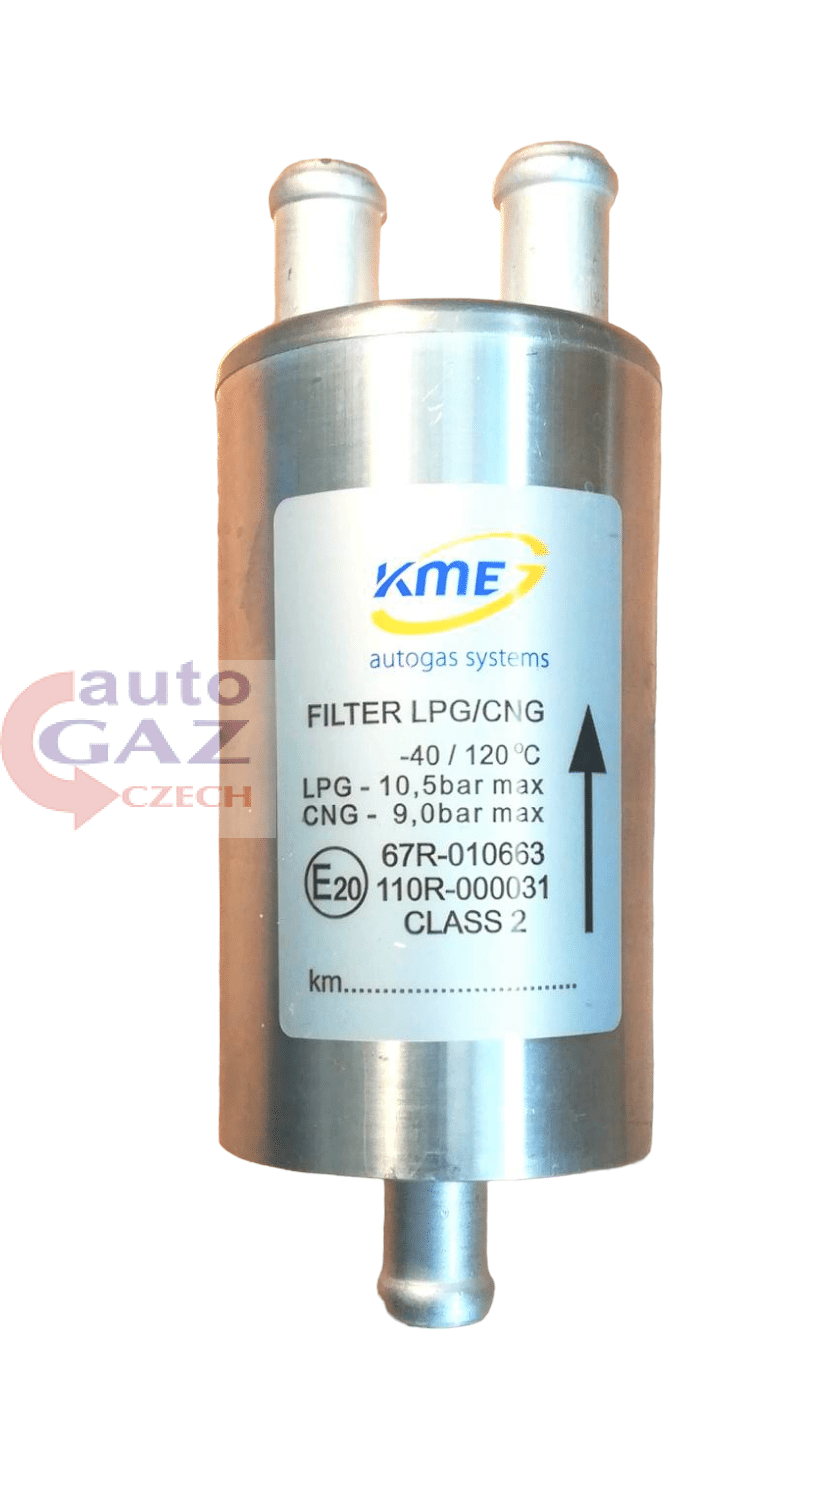 Filtr fazy lotnej KME 12mm / 2x12 mm włókno szklane